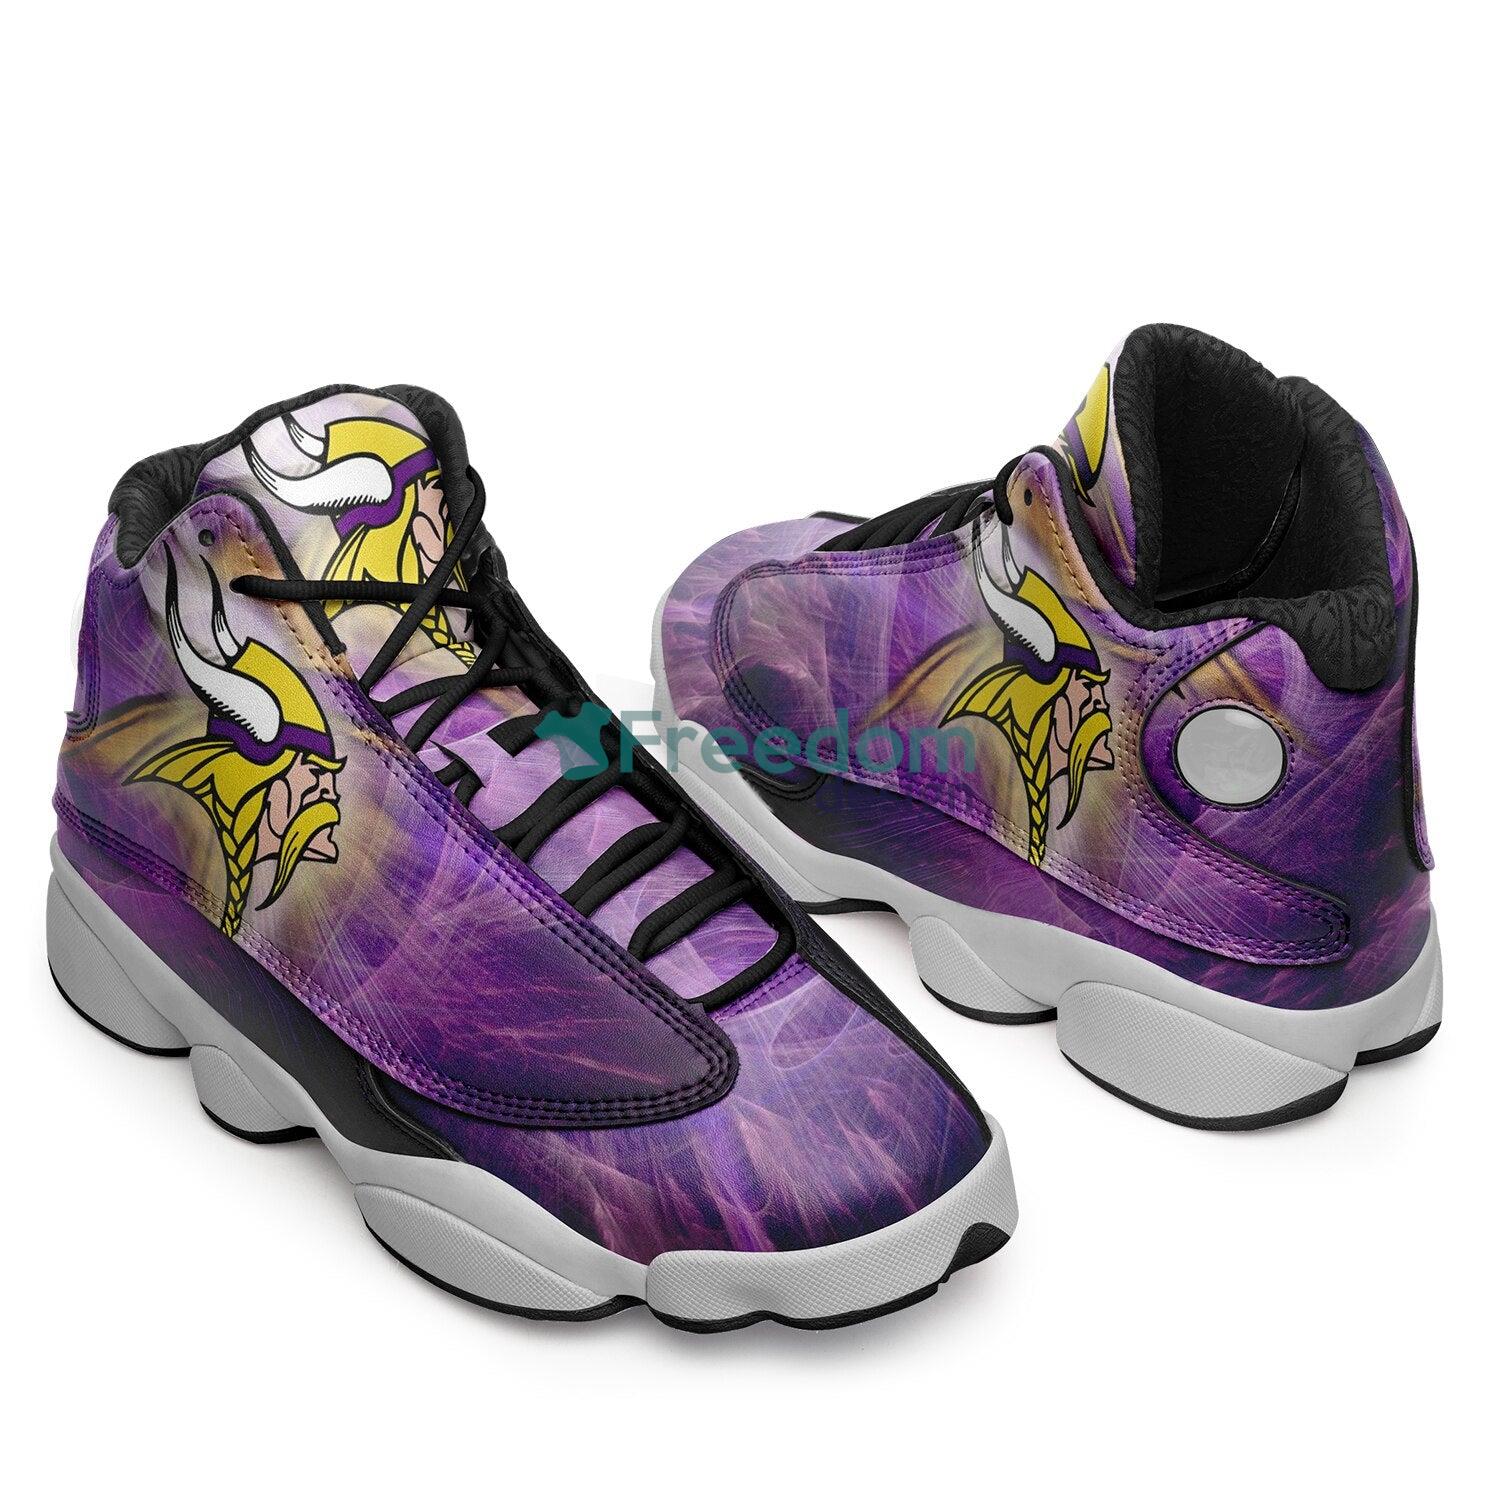 Minnesota Vikings Team Air Jordan 13 Sneaker Shoes For Fans